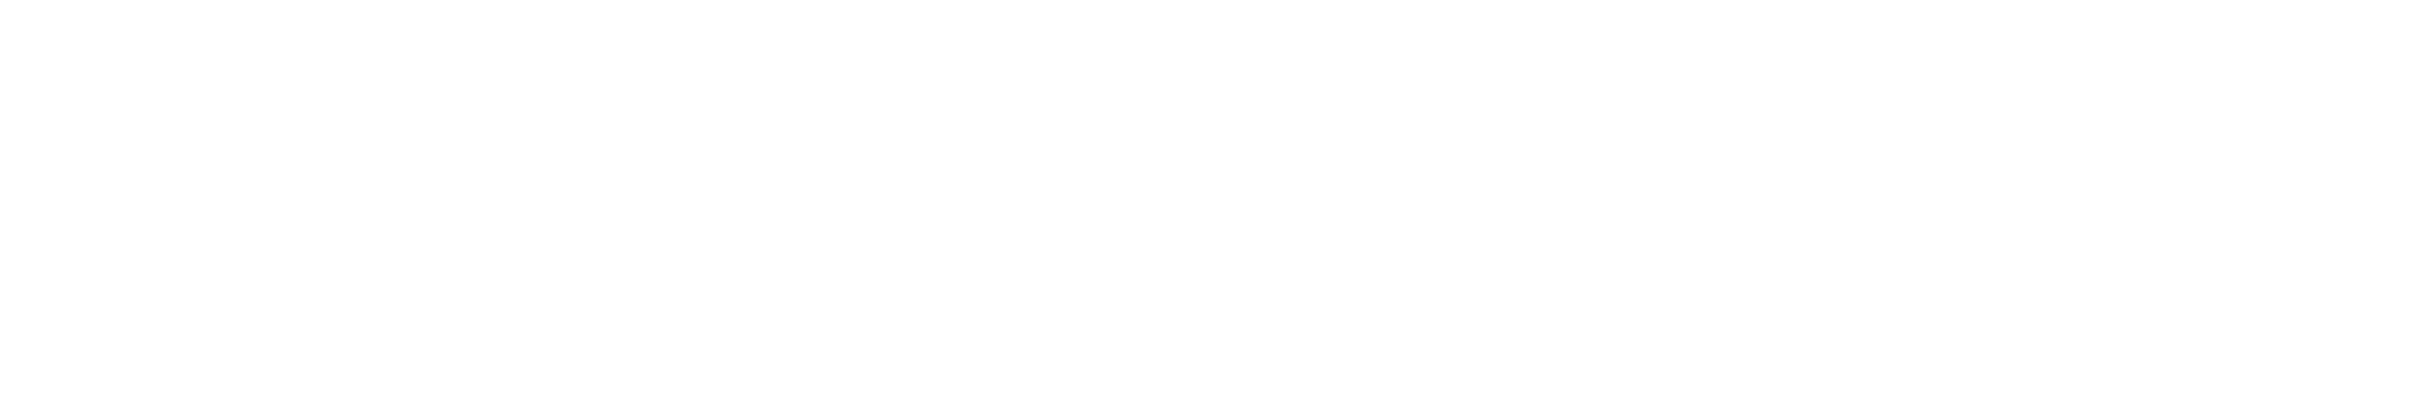 TechnokomKo-logo